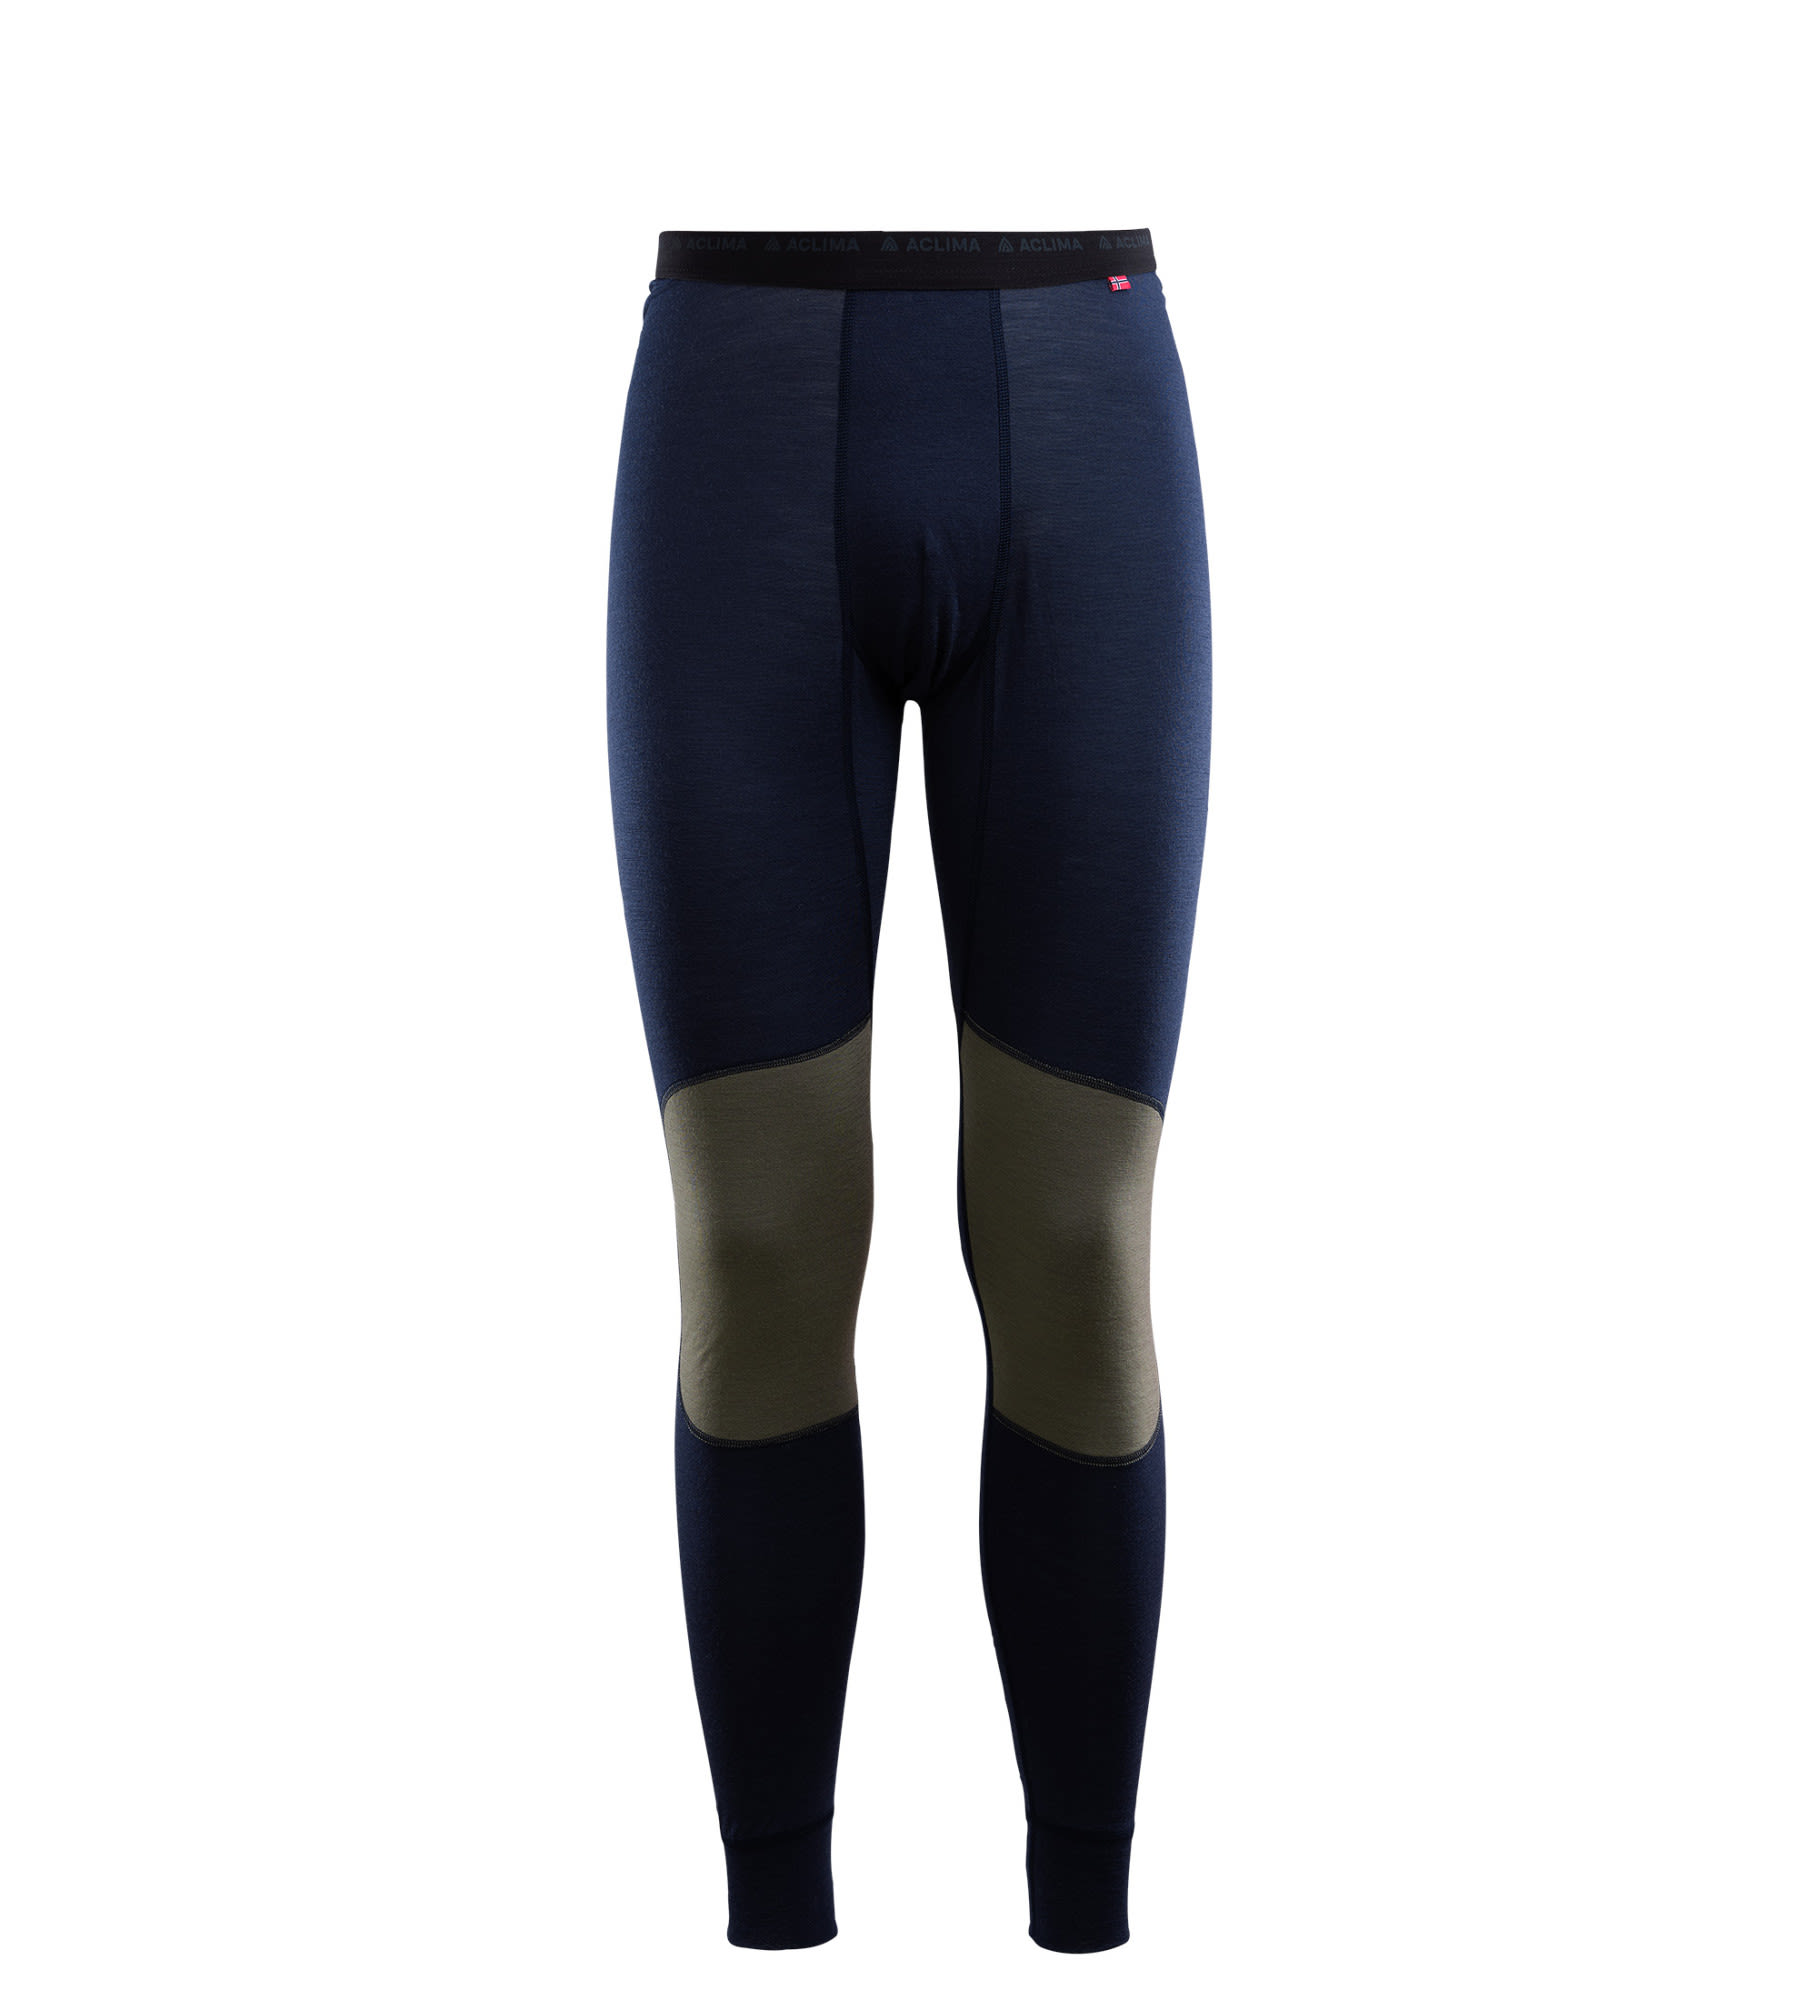 Aclima Lightwool Reinforced Long Pants Blau- Male Merino Leggings und Tights- Grsse S - Farbe Navy Blazer - Ranger Green